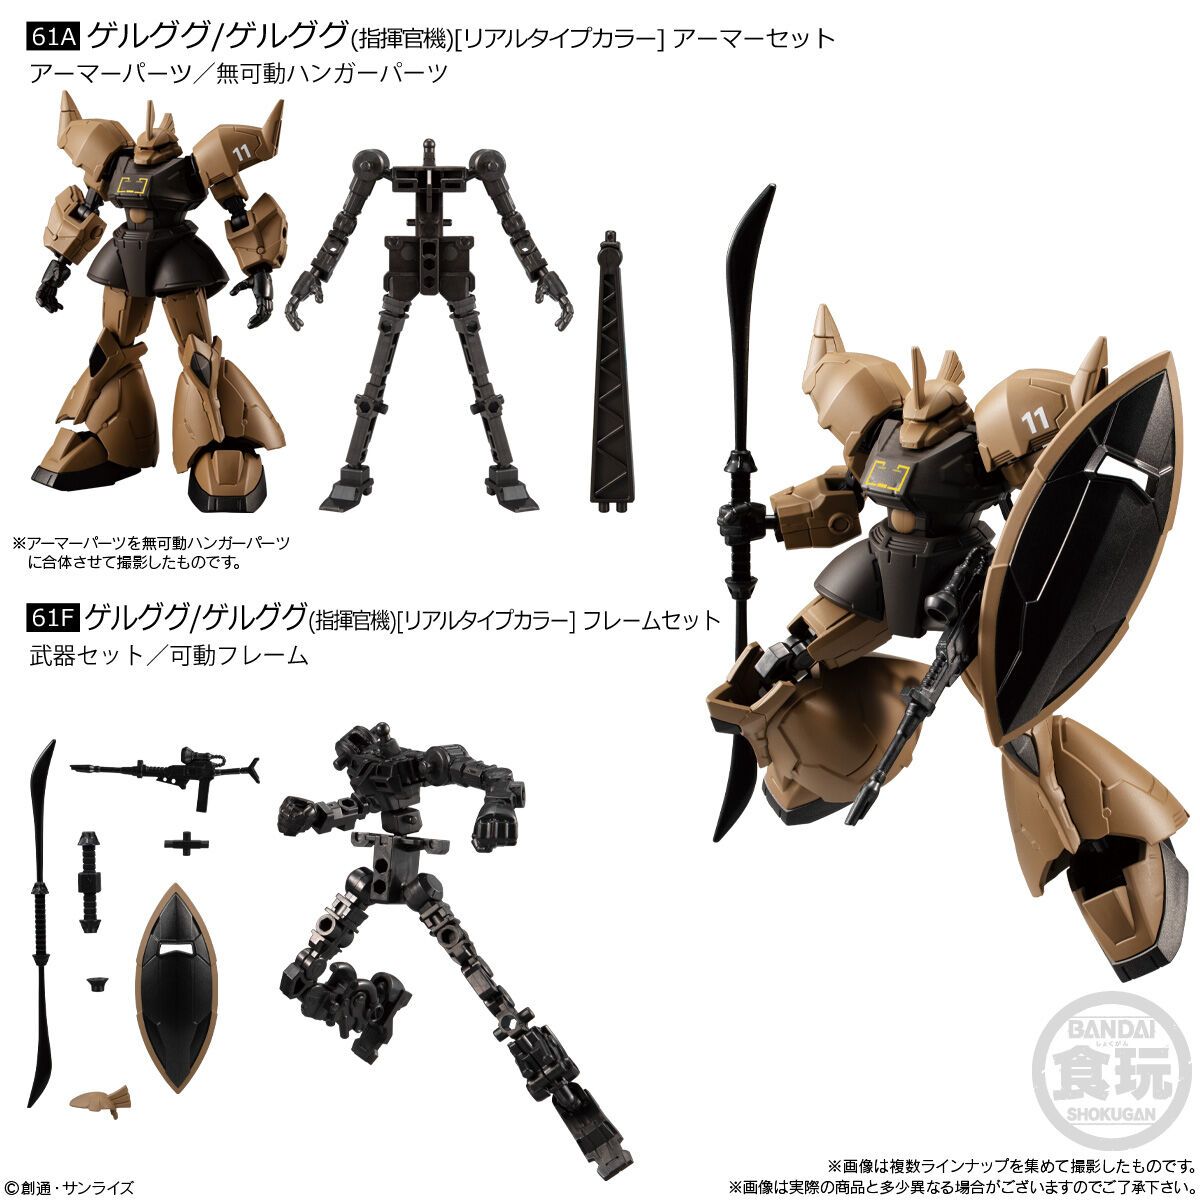  Mobile Suit Gundam G-Frame Fa Real Type Combo Mô Hình BANDAI CANDY CB-A2657063-4778 